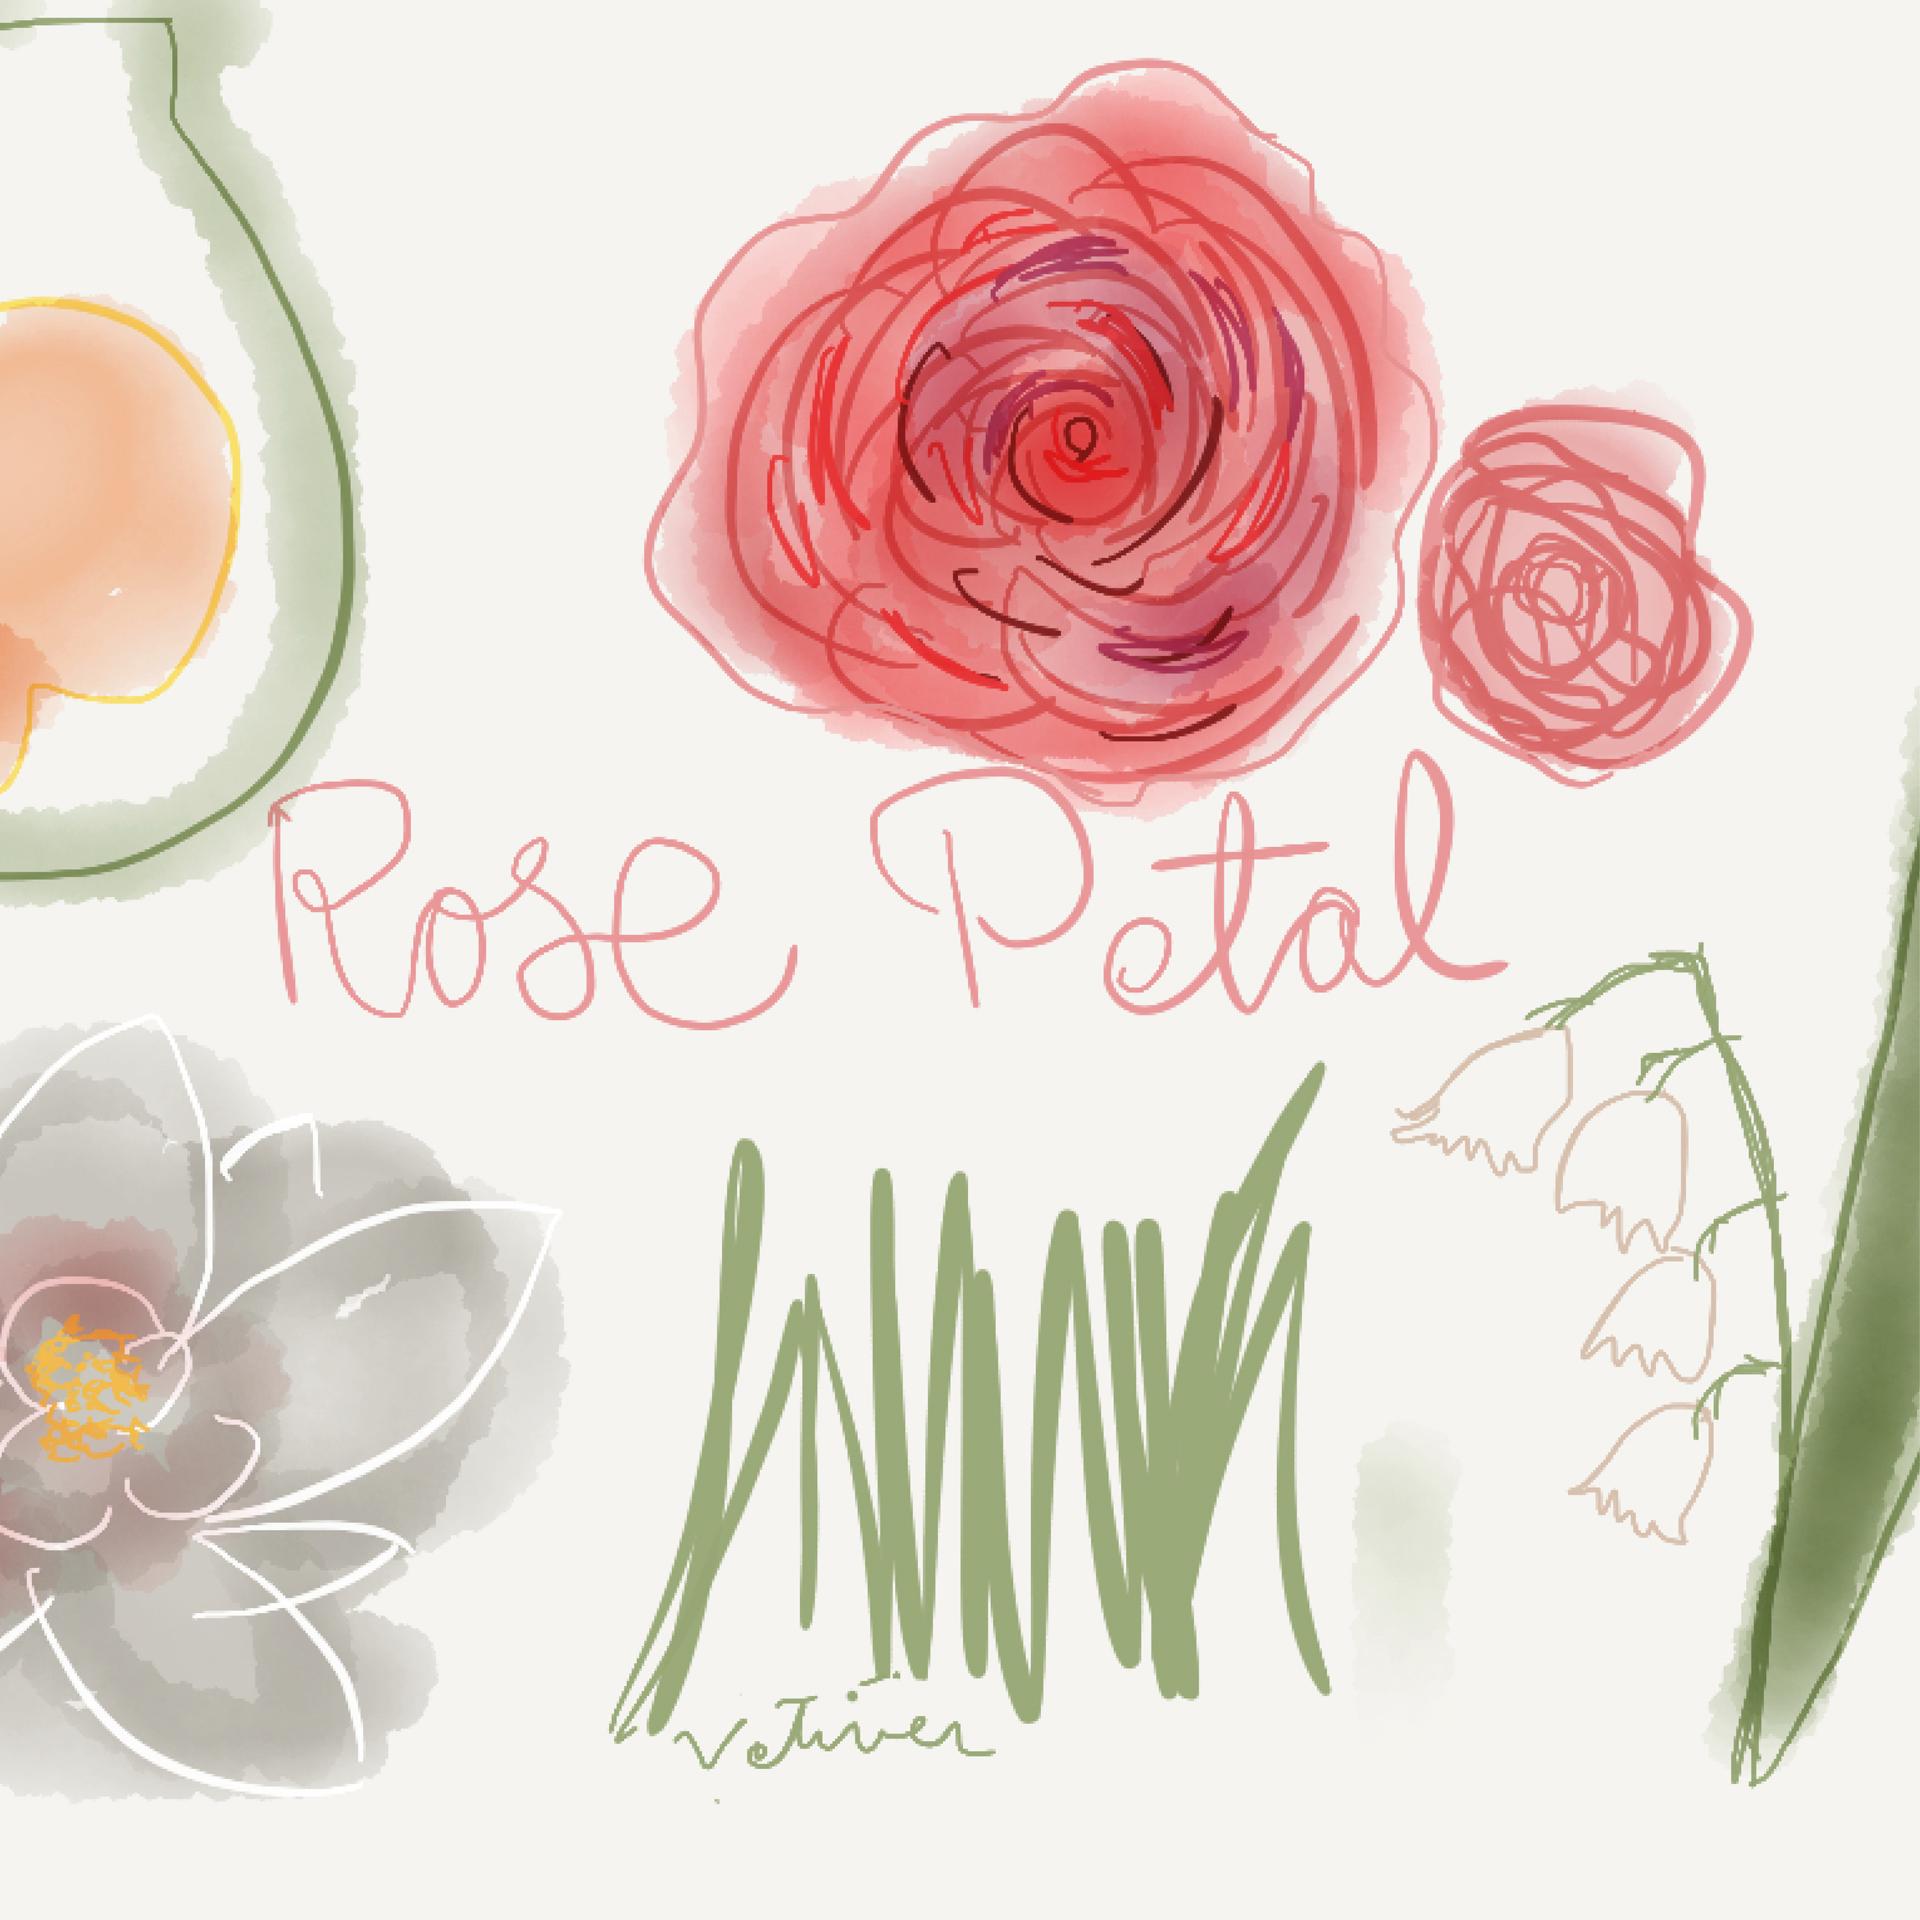 Perfume - Rose Petals.